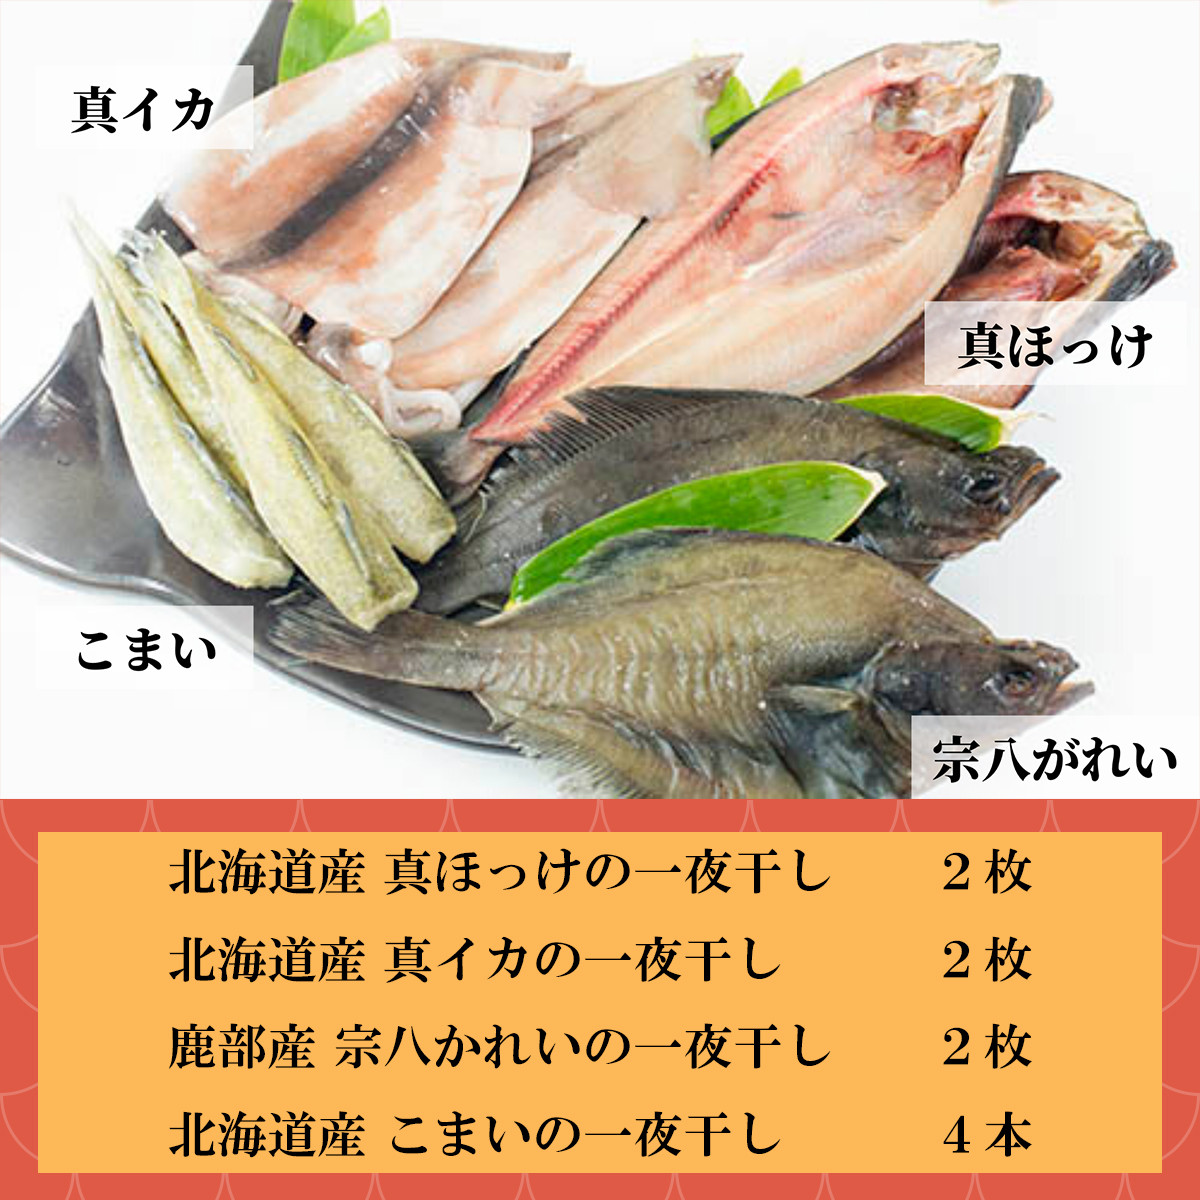 OUTLET SALE 北海道産 コマイ 氷下魚 の氷温乾燥一夜干し 約600g 200g×3袋 送料無料